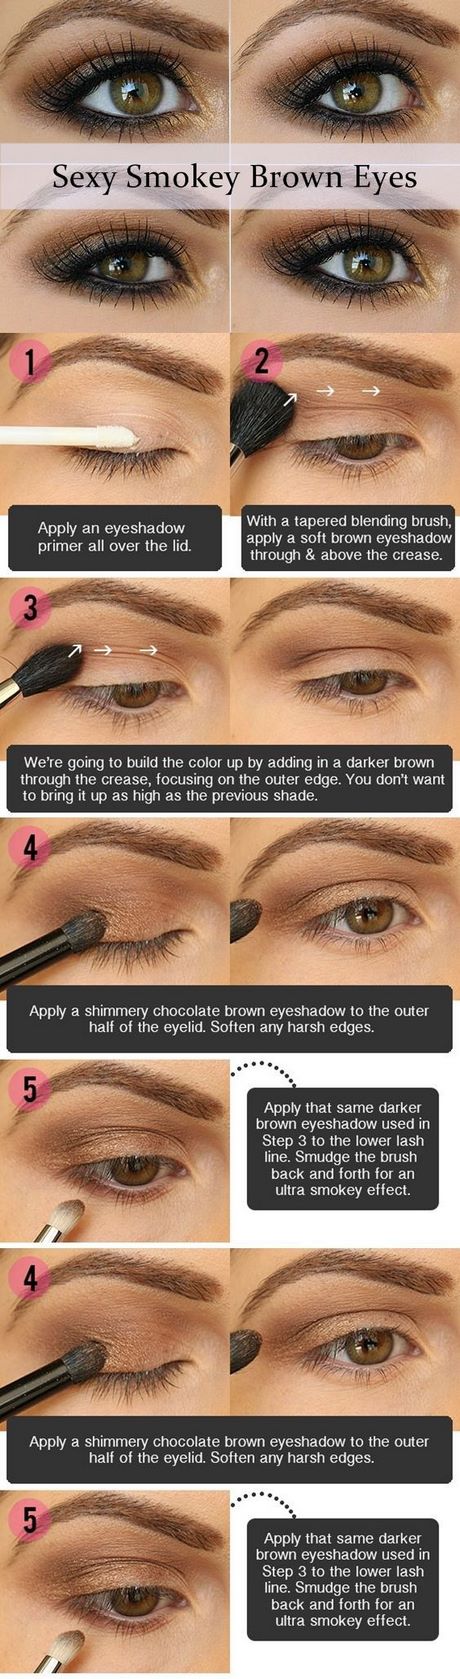 eye-makeup-for-light-brown-eyes-tutorial-37 Oogmake-up voor lichtbruine ogen tutorial